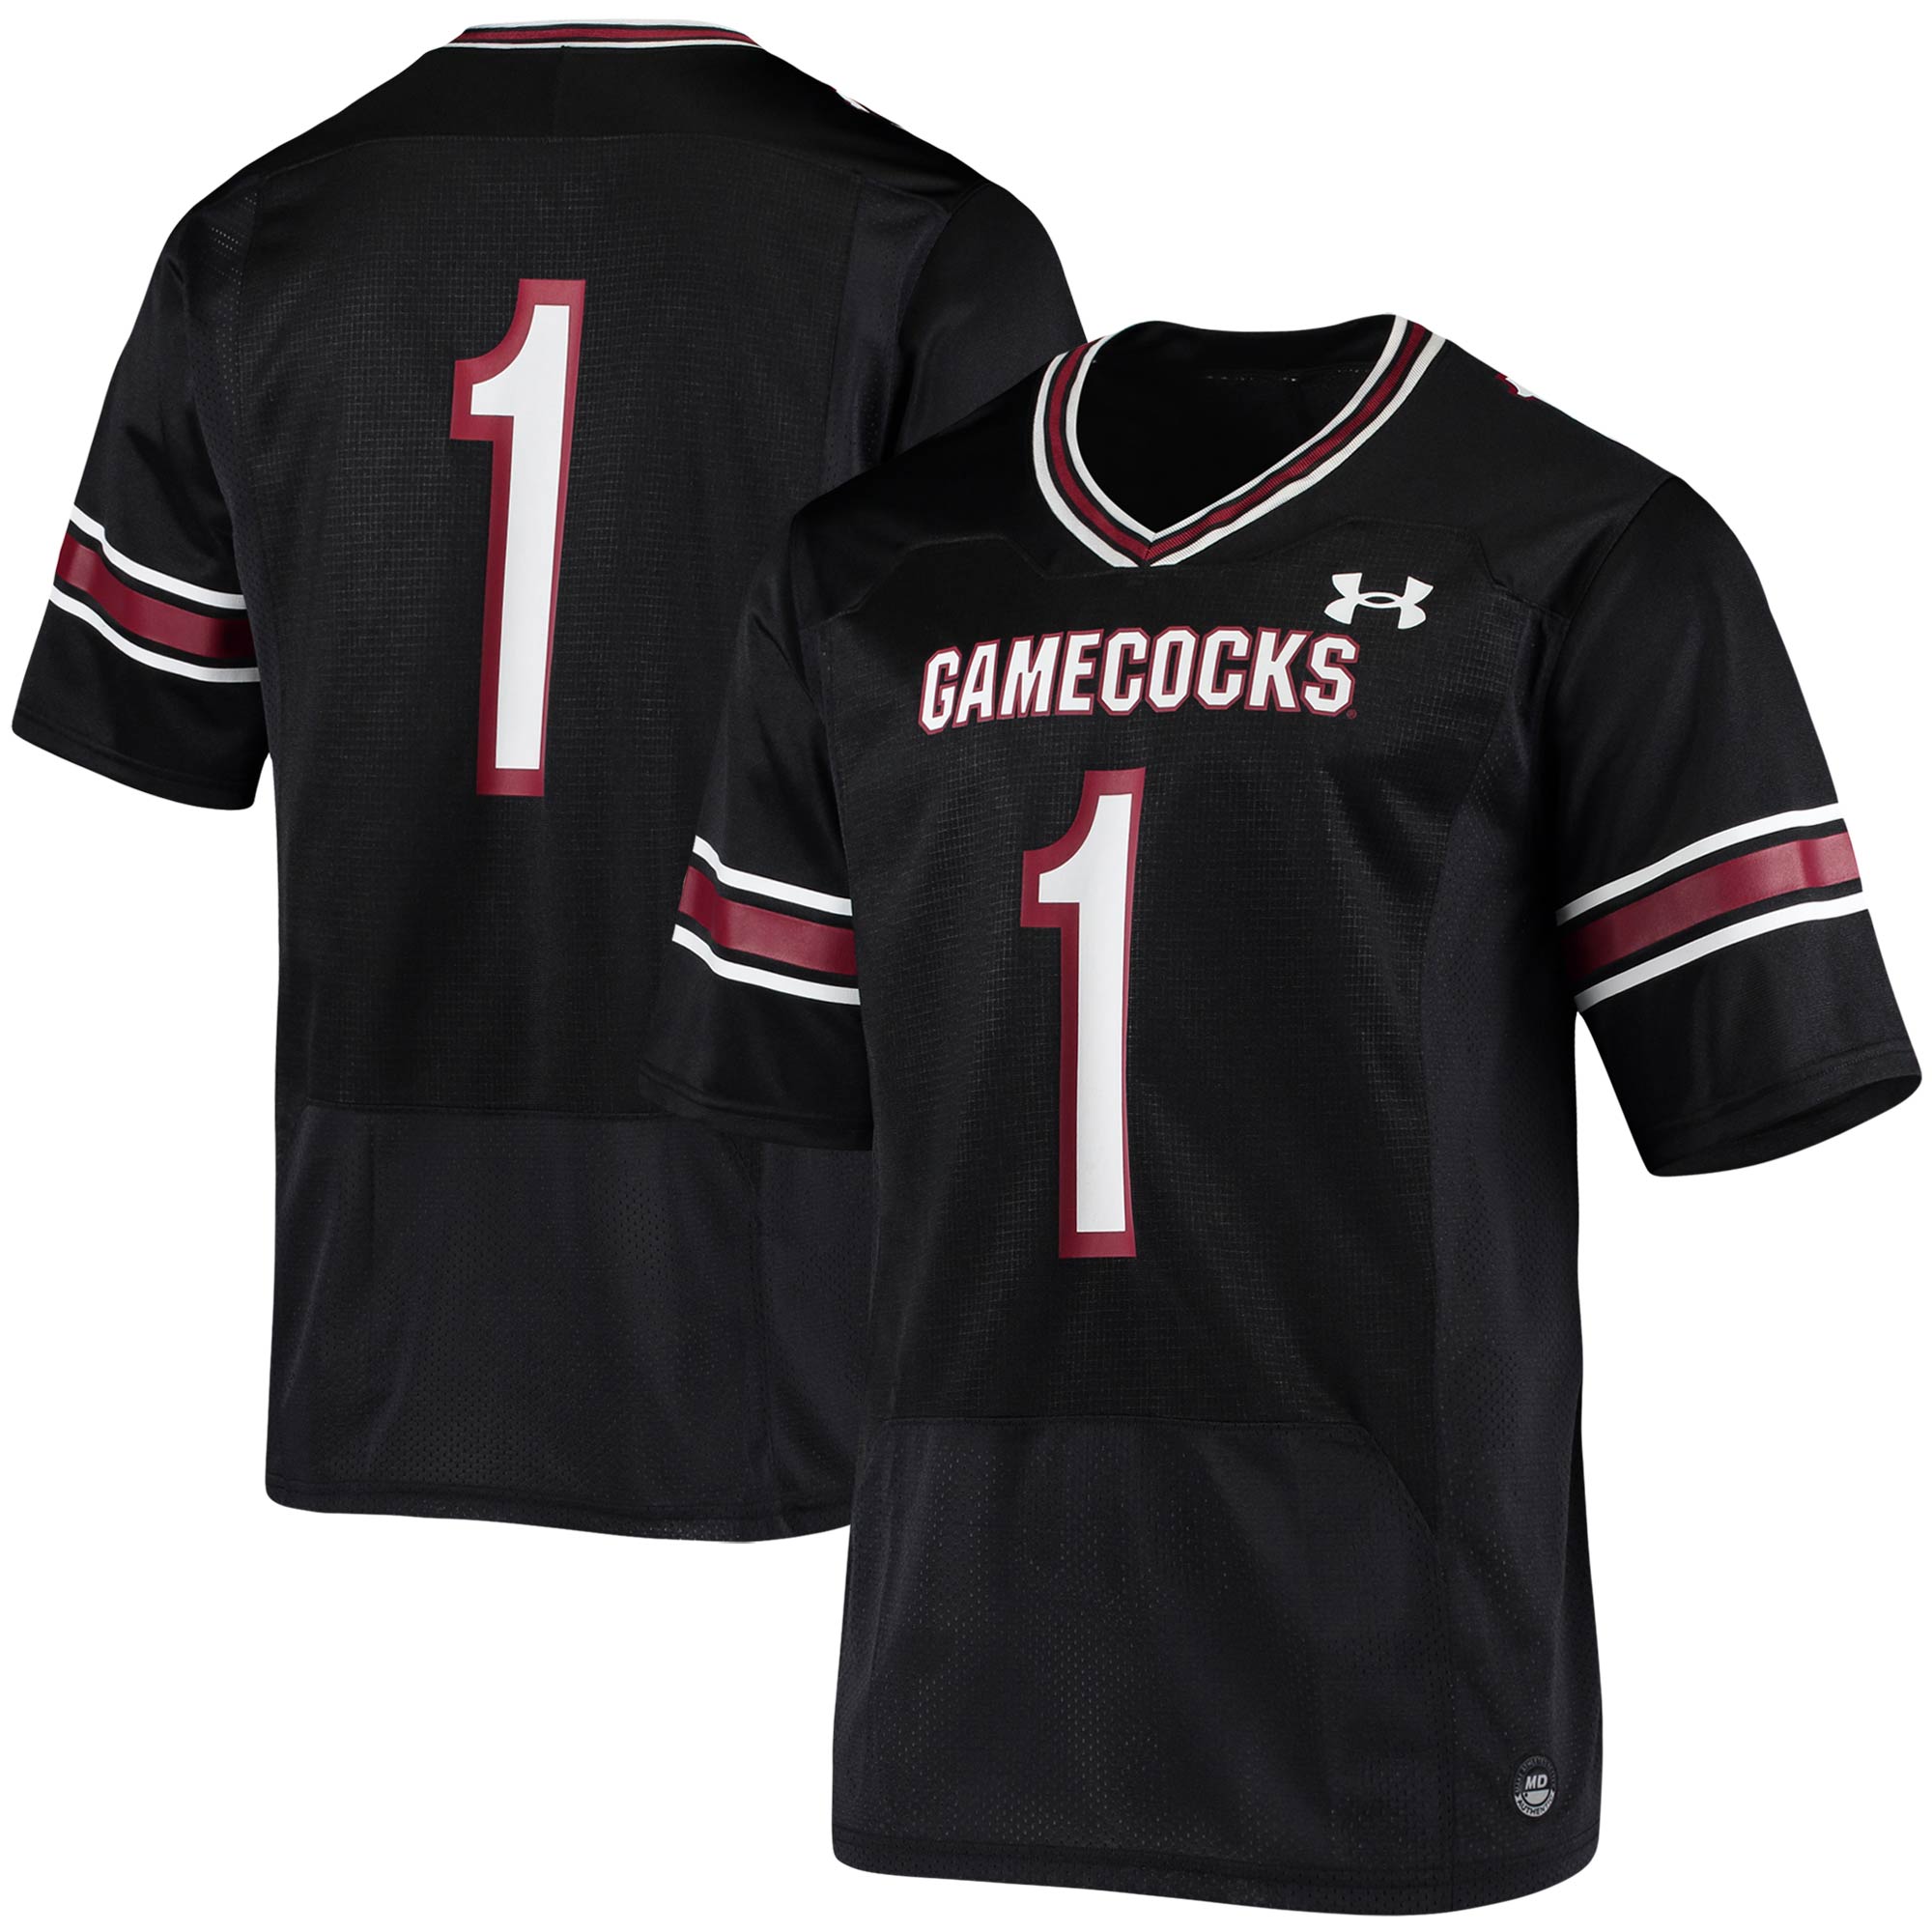 #1 South Carolina Gamecocks Under Armour Logo Replica  Football Shirts Jersey - Black For Youth Women Men